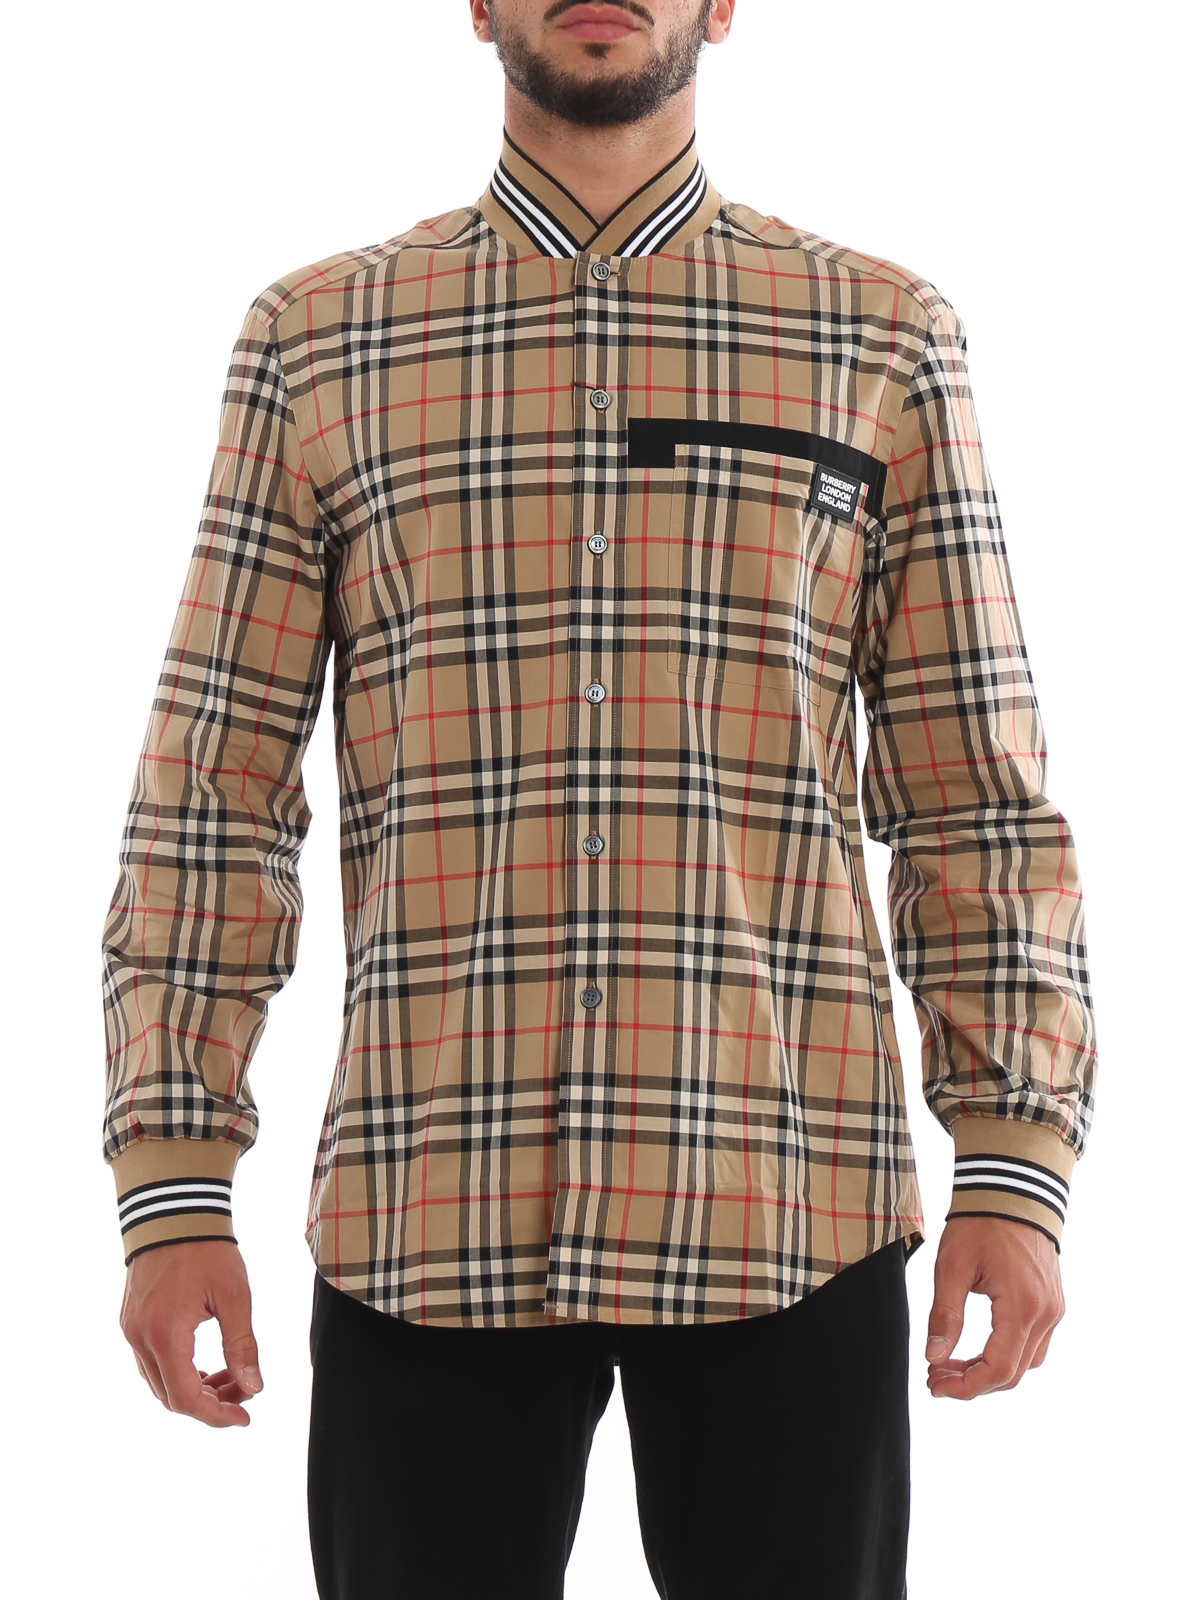 Shirts Burberry - Barron check shirt - 8017302 | Shop online at iKRIX